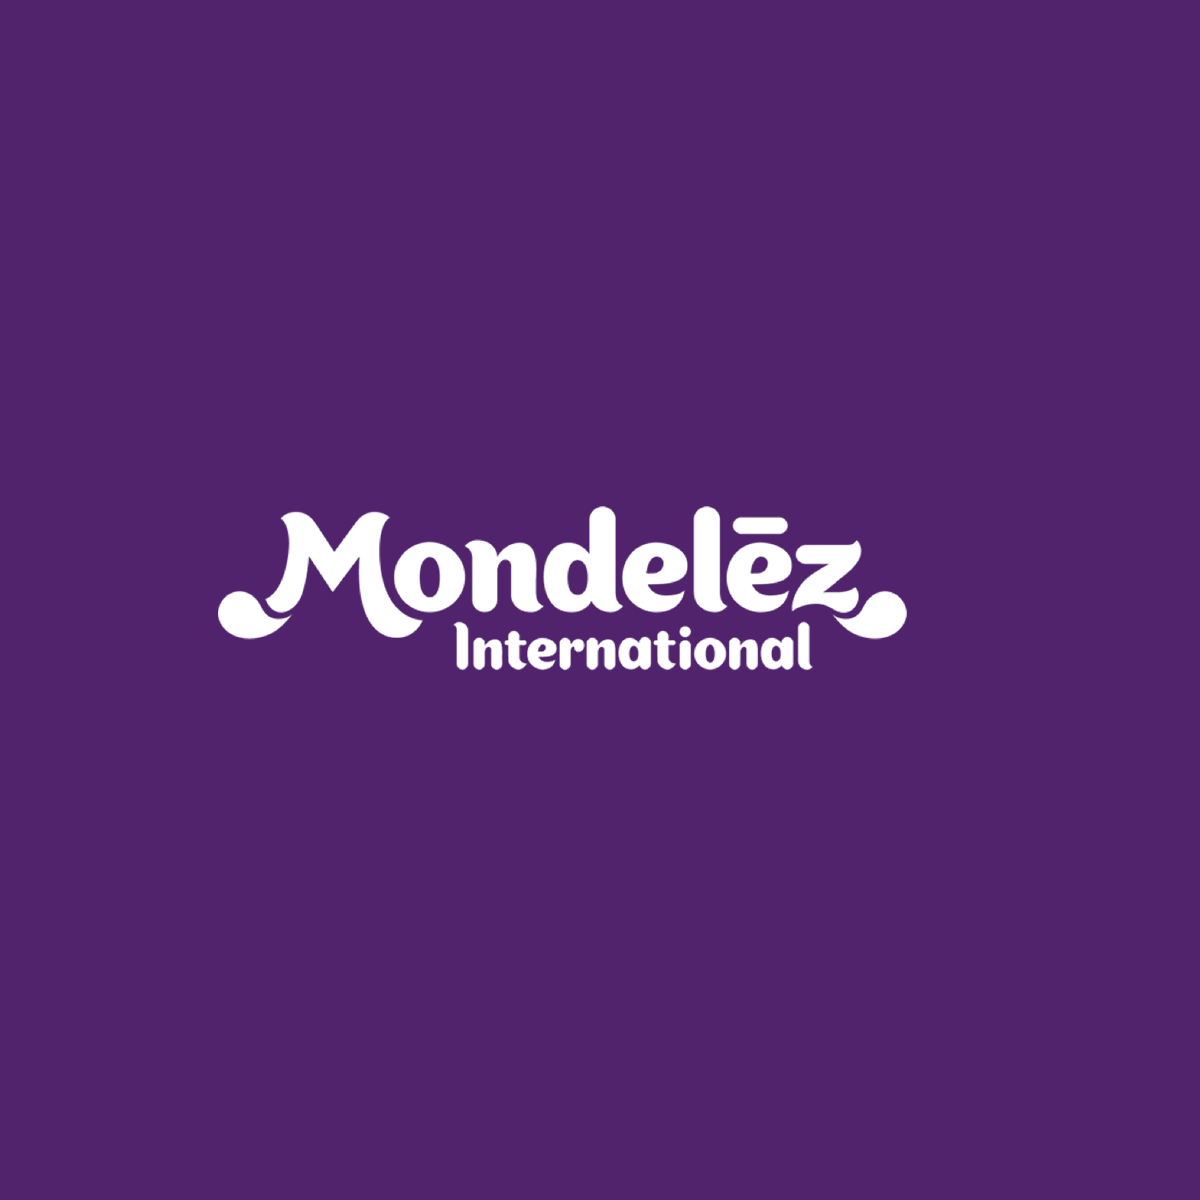 Mondelez-Cover.png